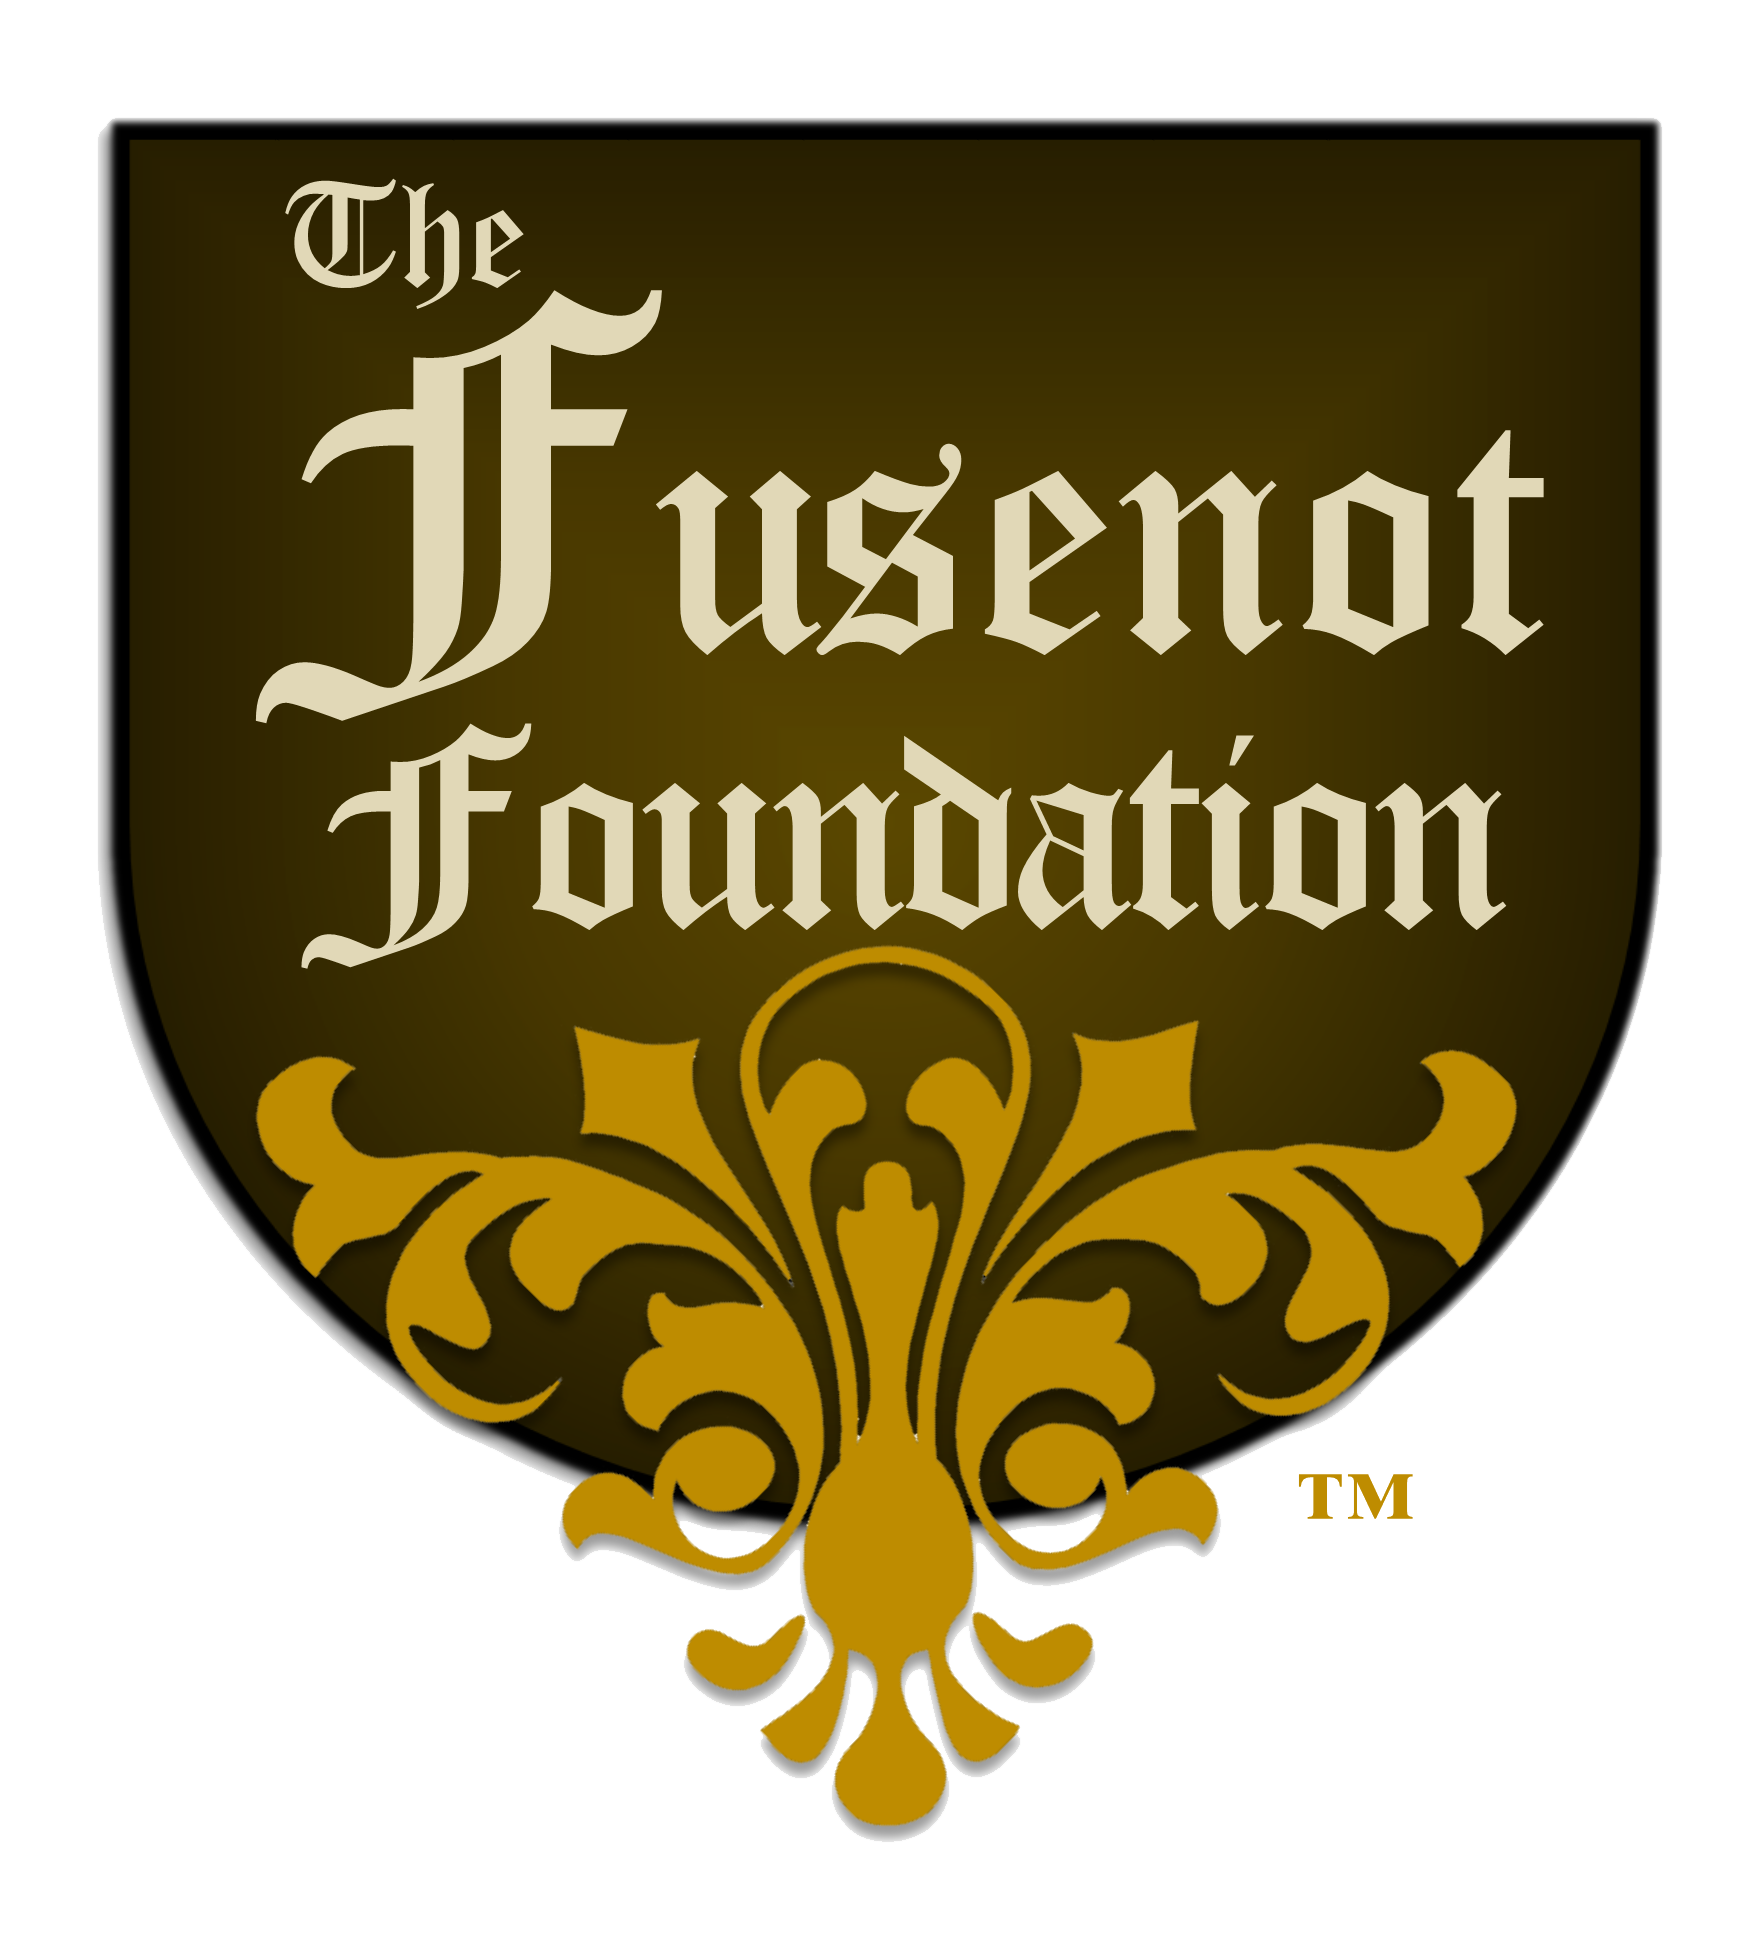 The Fusenot Foundation